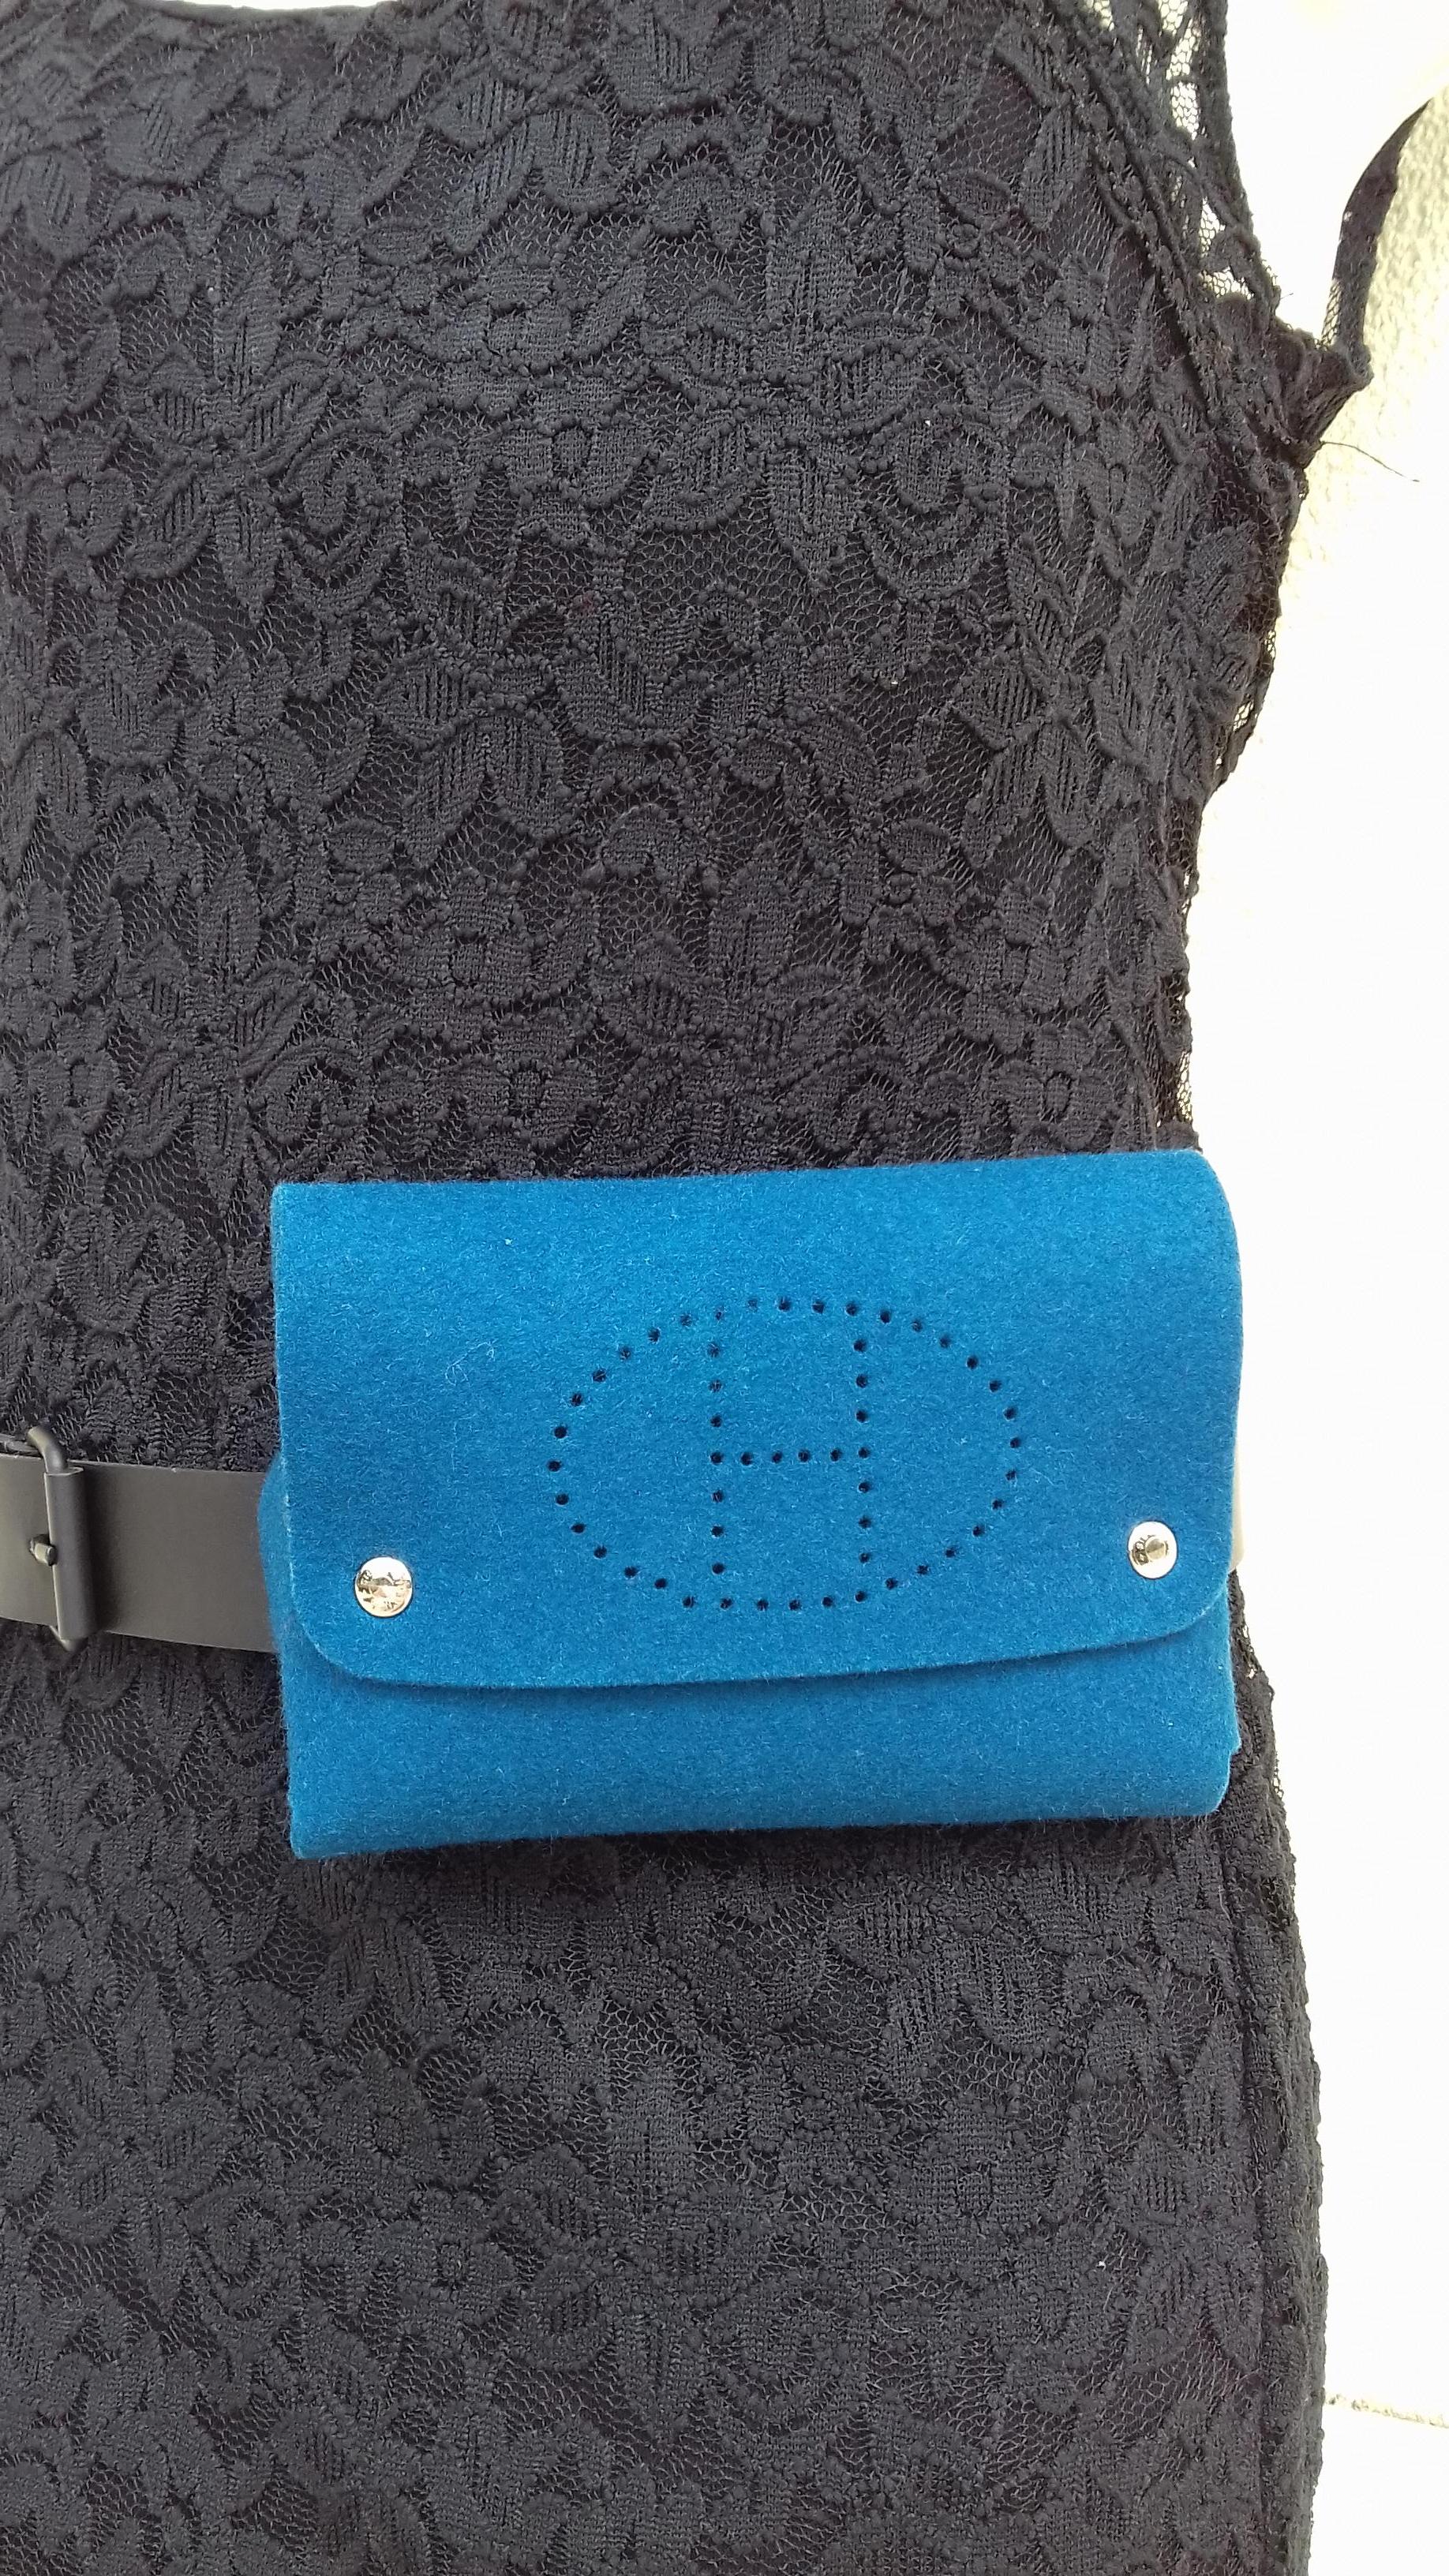 Hermès Felt Pouch Bag Belt Purse Playing Cards Case Blue in Box 11